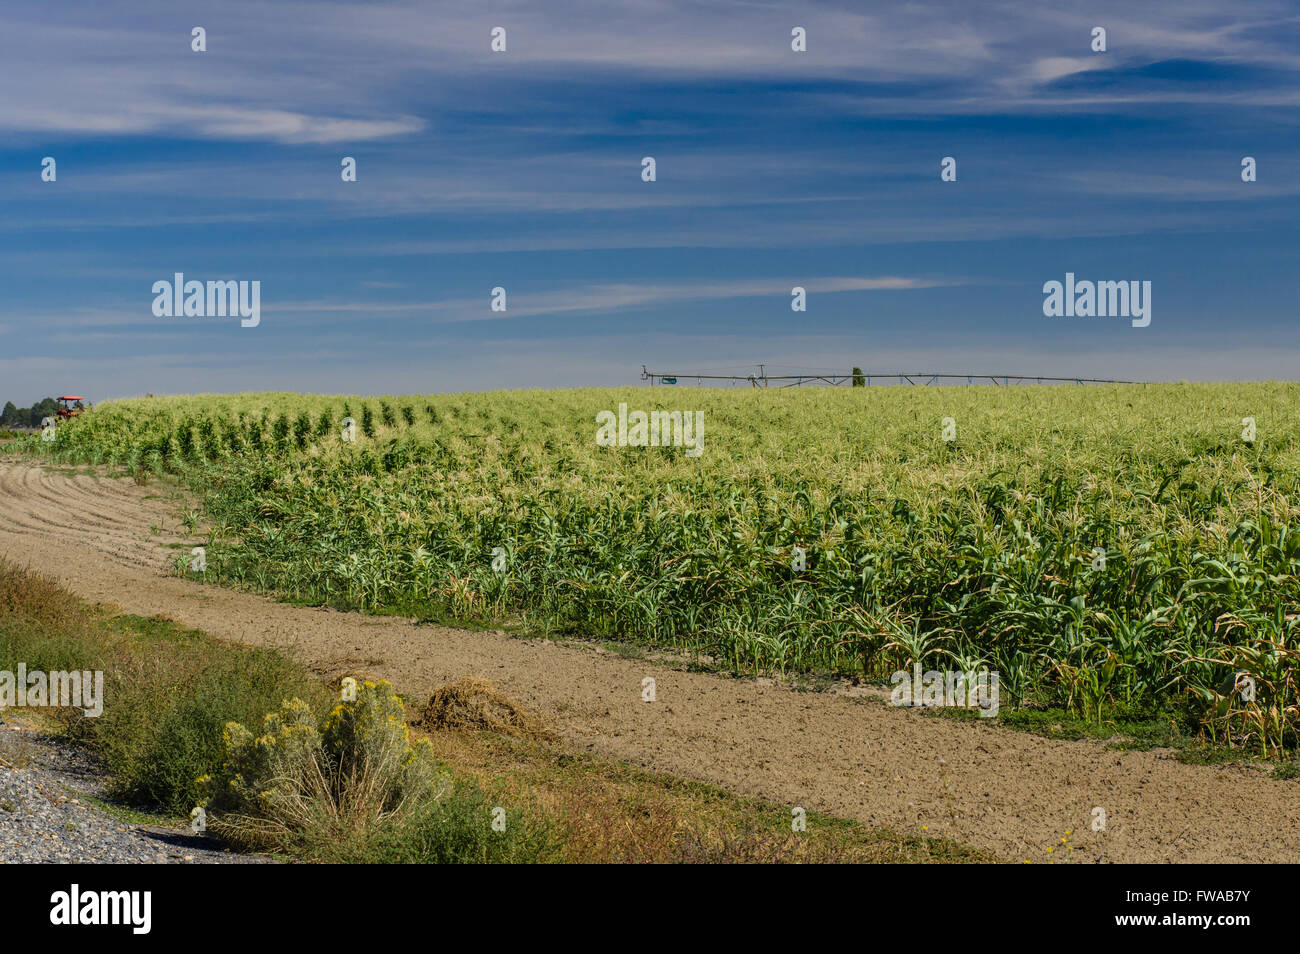 Corn plants in rows on a large farm in eastern Washington, USA Stock Photo